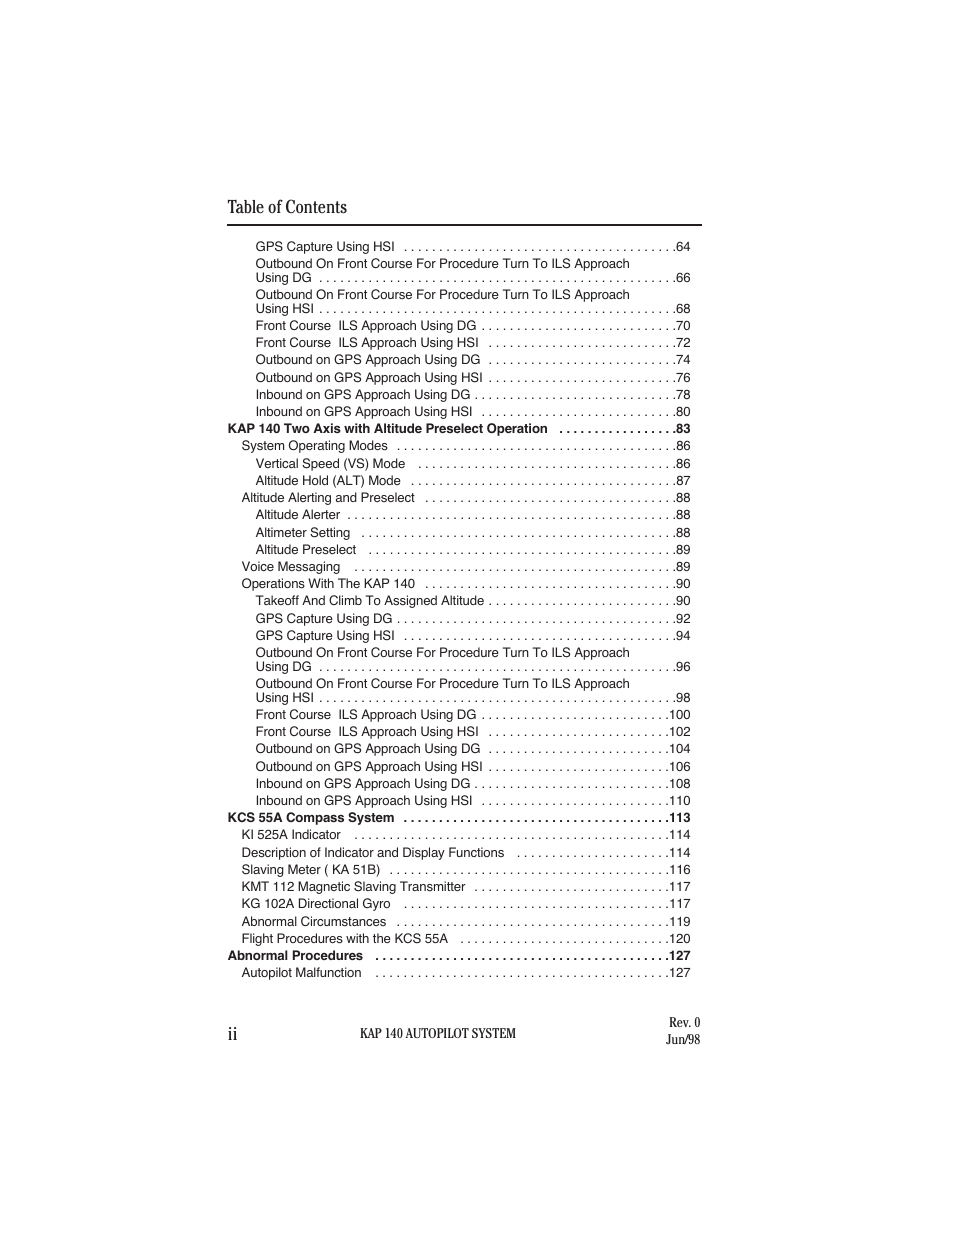 Table of contents ii | BendixKing KAP 140 User Manual | Page 8 / 102